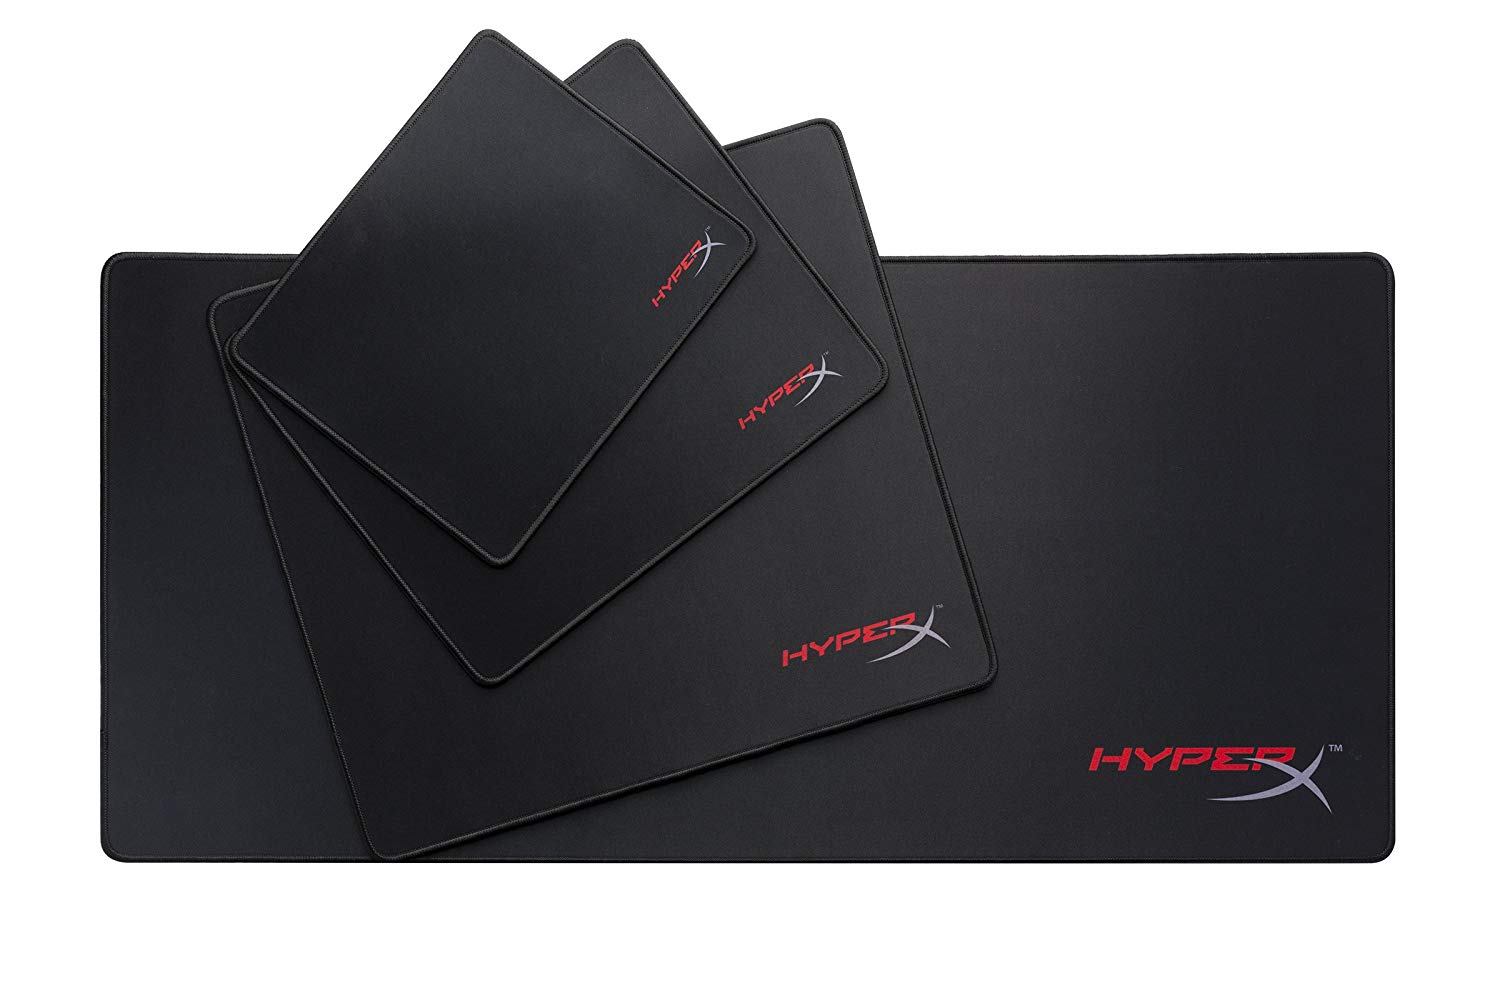 HyperX FURY S Gaming Mouse Pad (Extra Large) ของแท้ แผ่นรองเมาส์